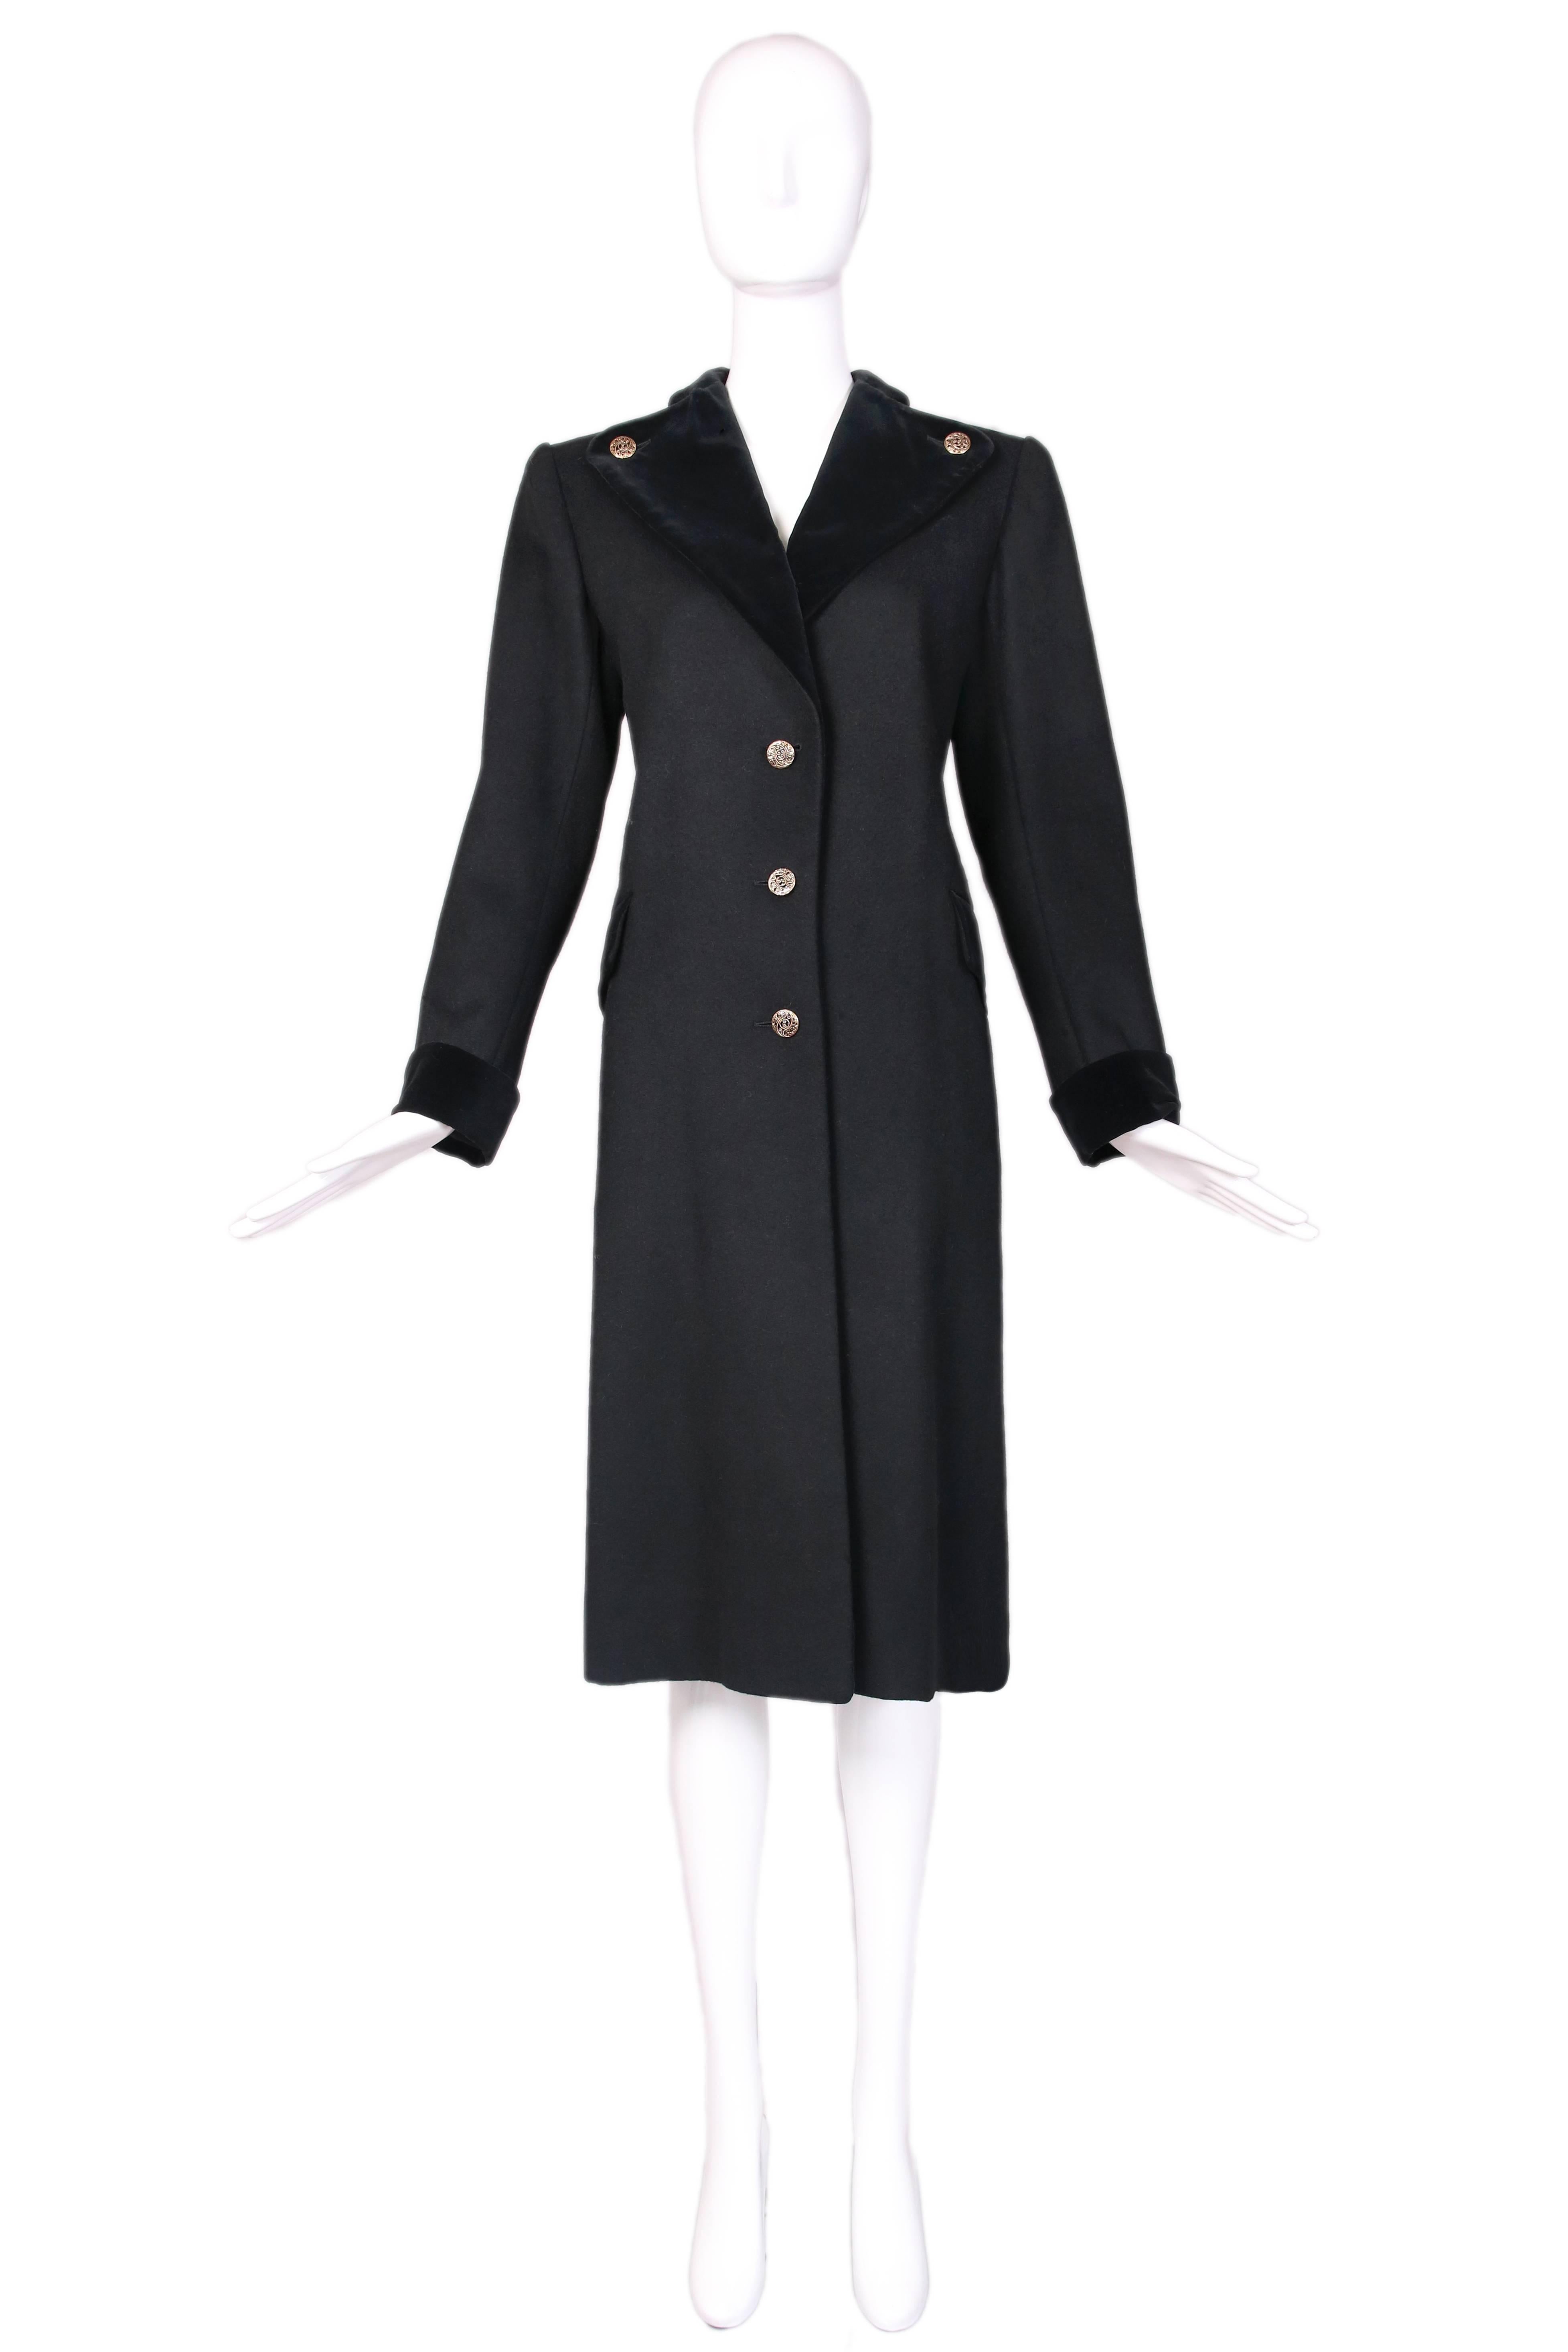 Vintage Yves Saint Laurent black melton wool military style coat with velvet trim and decorative gold tone buttons. In excellent condition. Size 40.
MEASUREMENTS:
Shoulders - 17